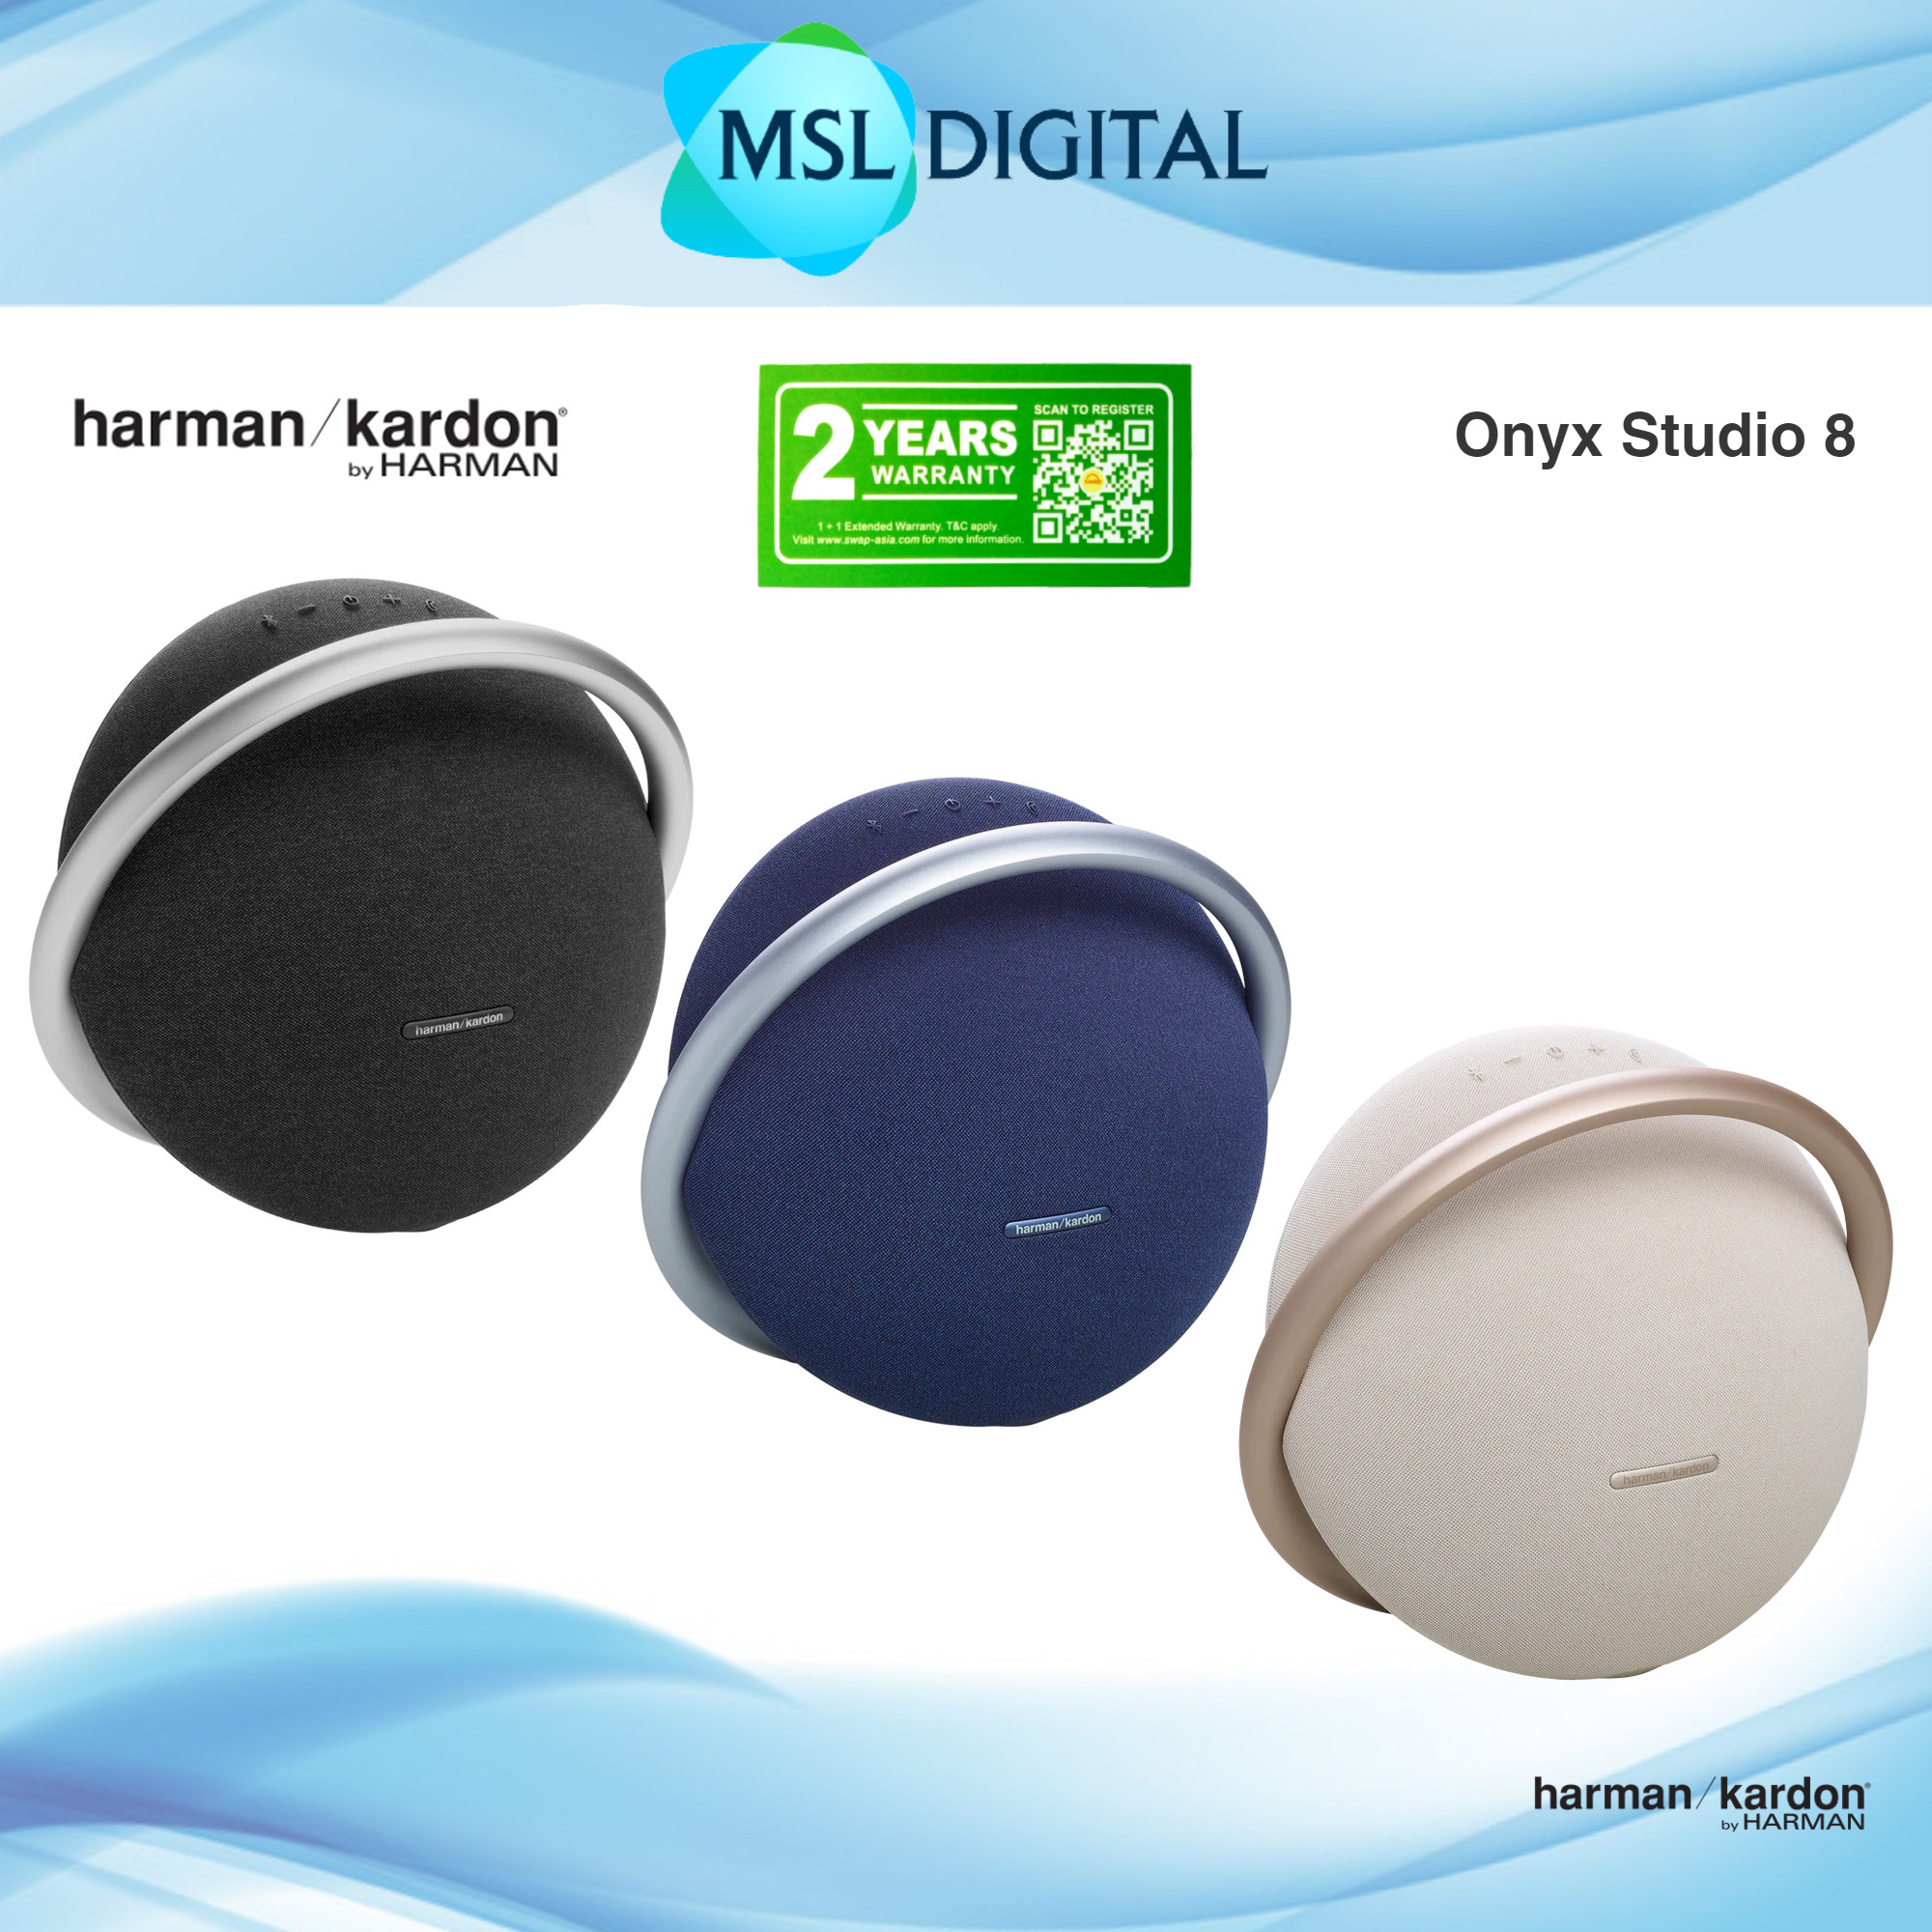 Portable Online - Digital ONYX Bluetooth Speaker STUDIO Kardon MSL Harman Store 8 Stereo